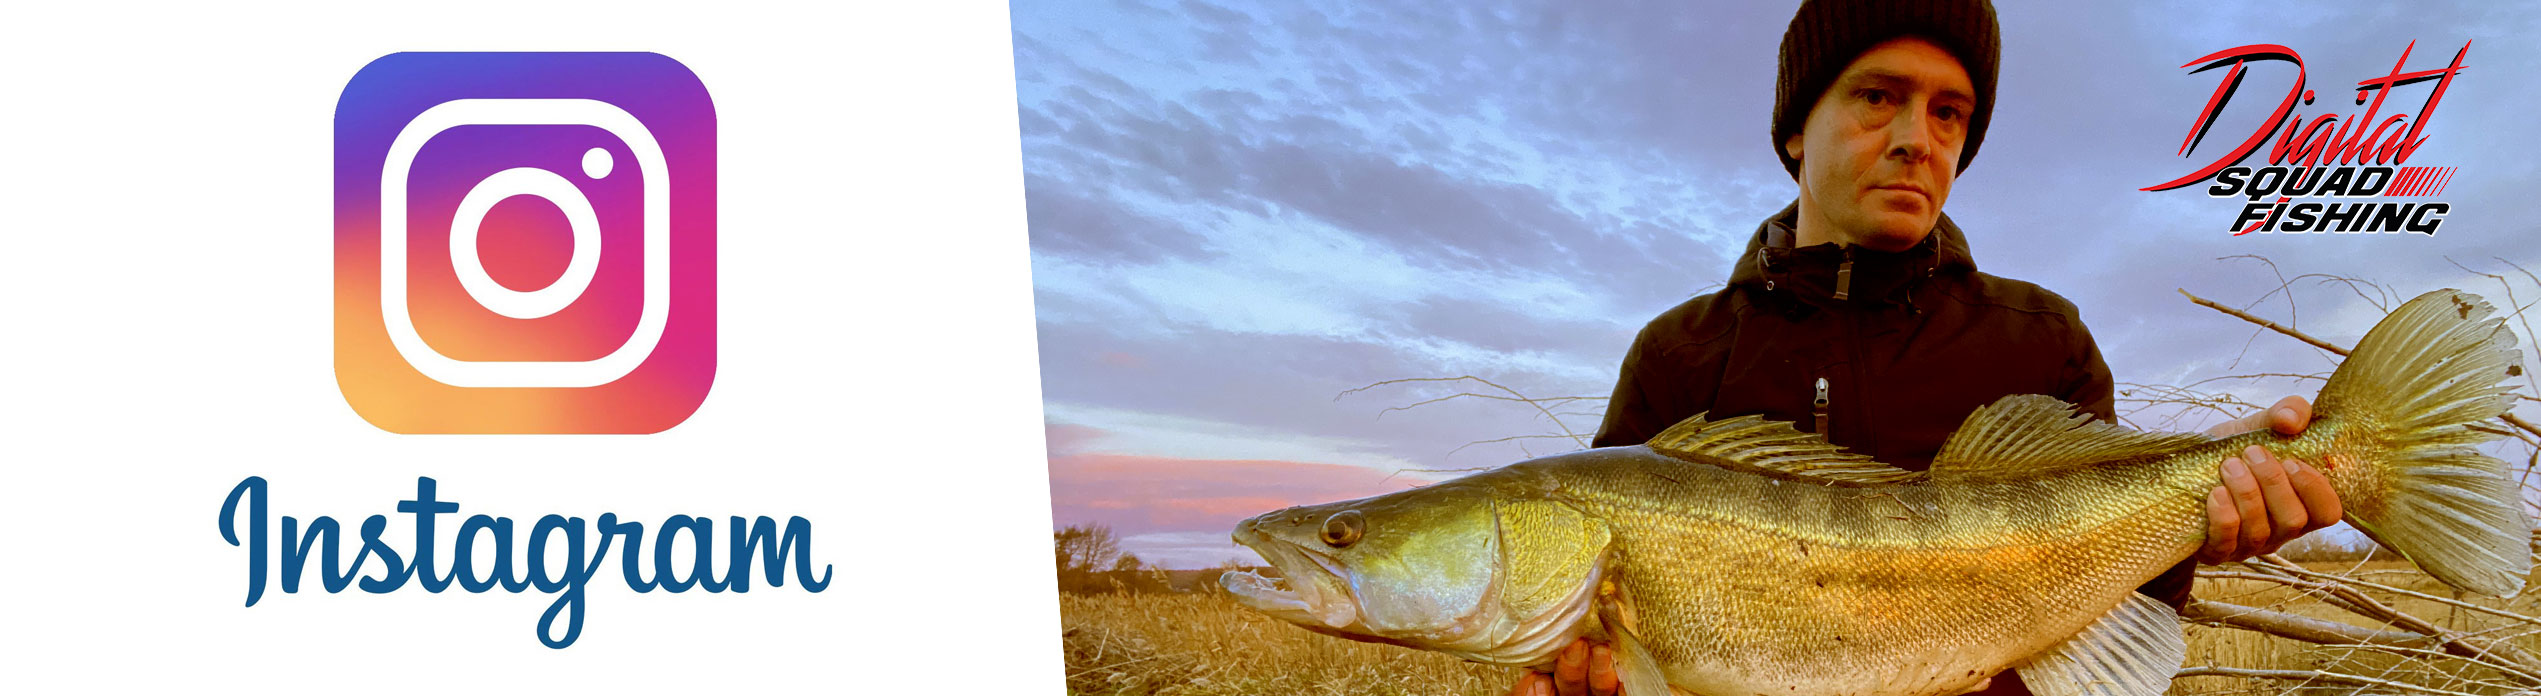 instagram fishing lure bait account image pond lake pike zander fishing catfish bass trout